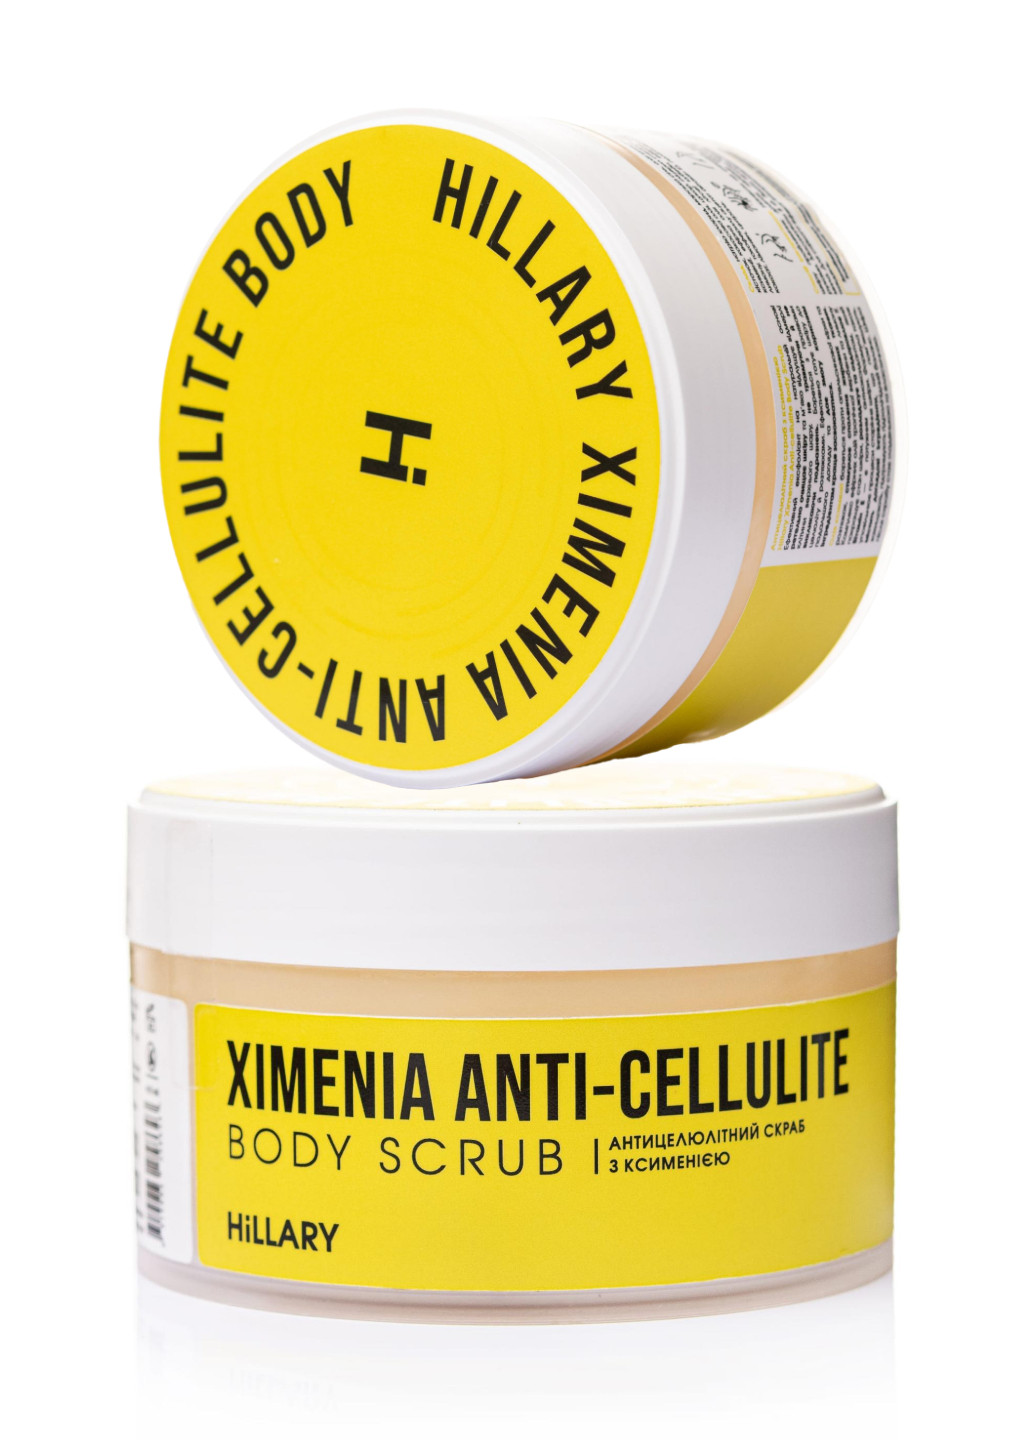 Комплекс для антицеллюлитного ухода в домашних условиях с маслом ксимении Хimenia Anti-cellulite Hillary (252999433)